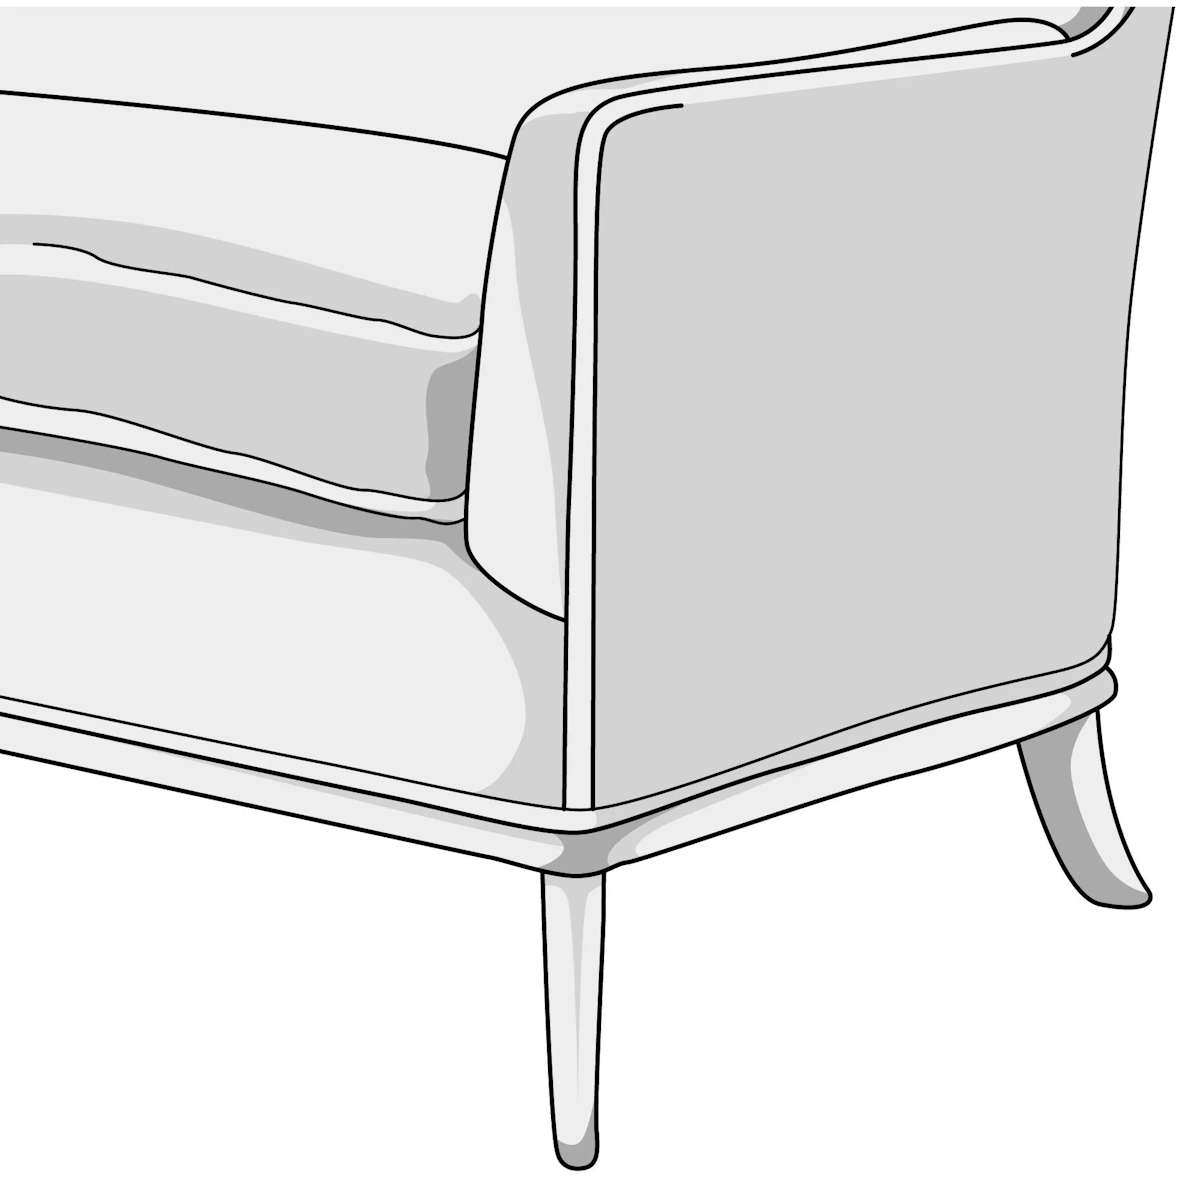 Illustration of saber style sofa